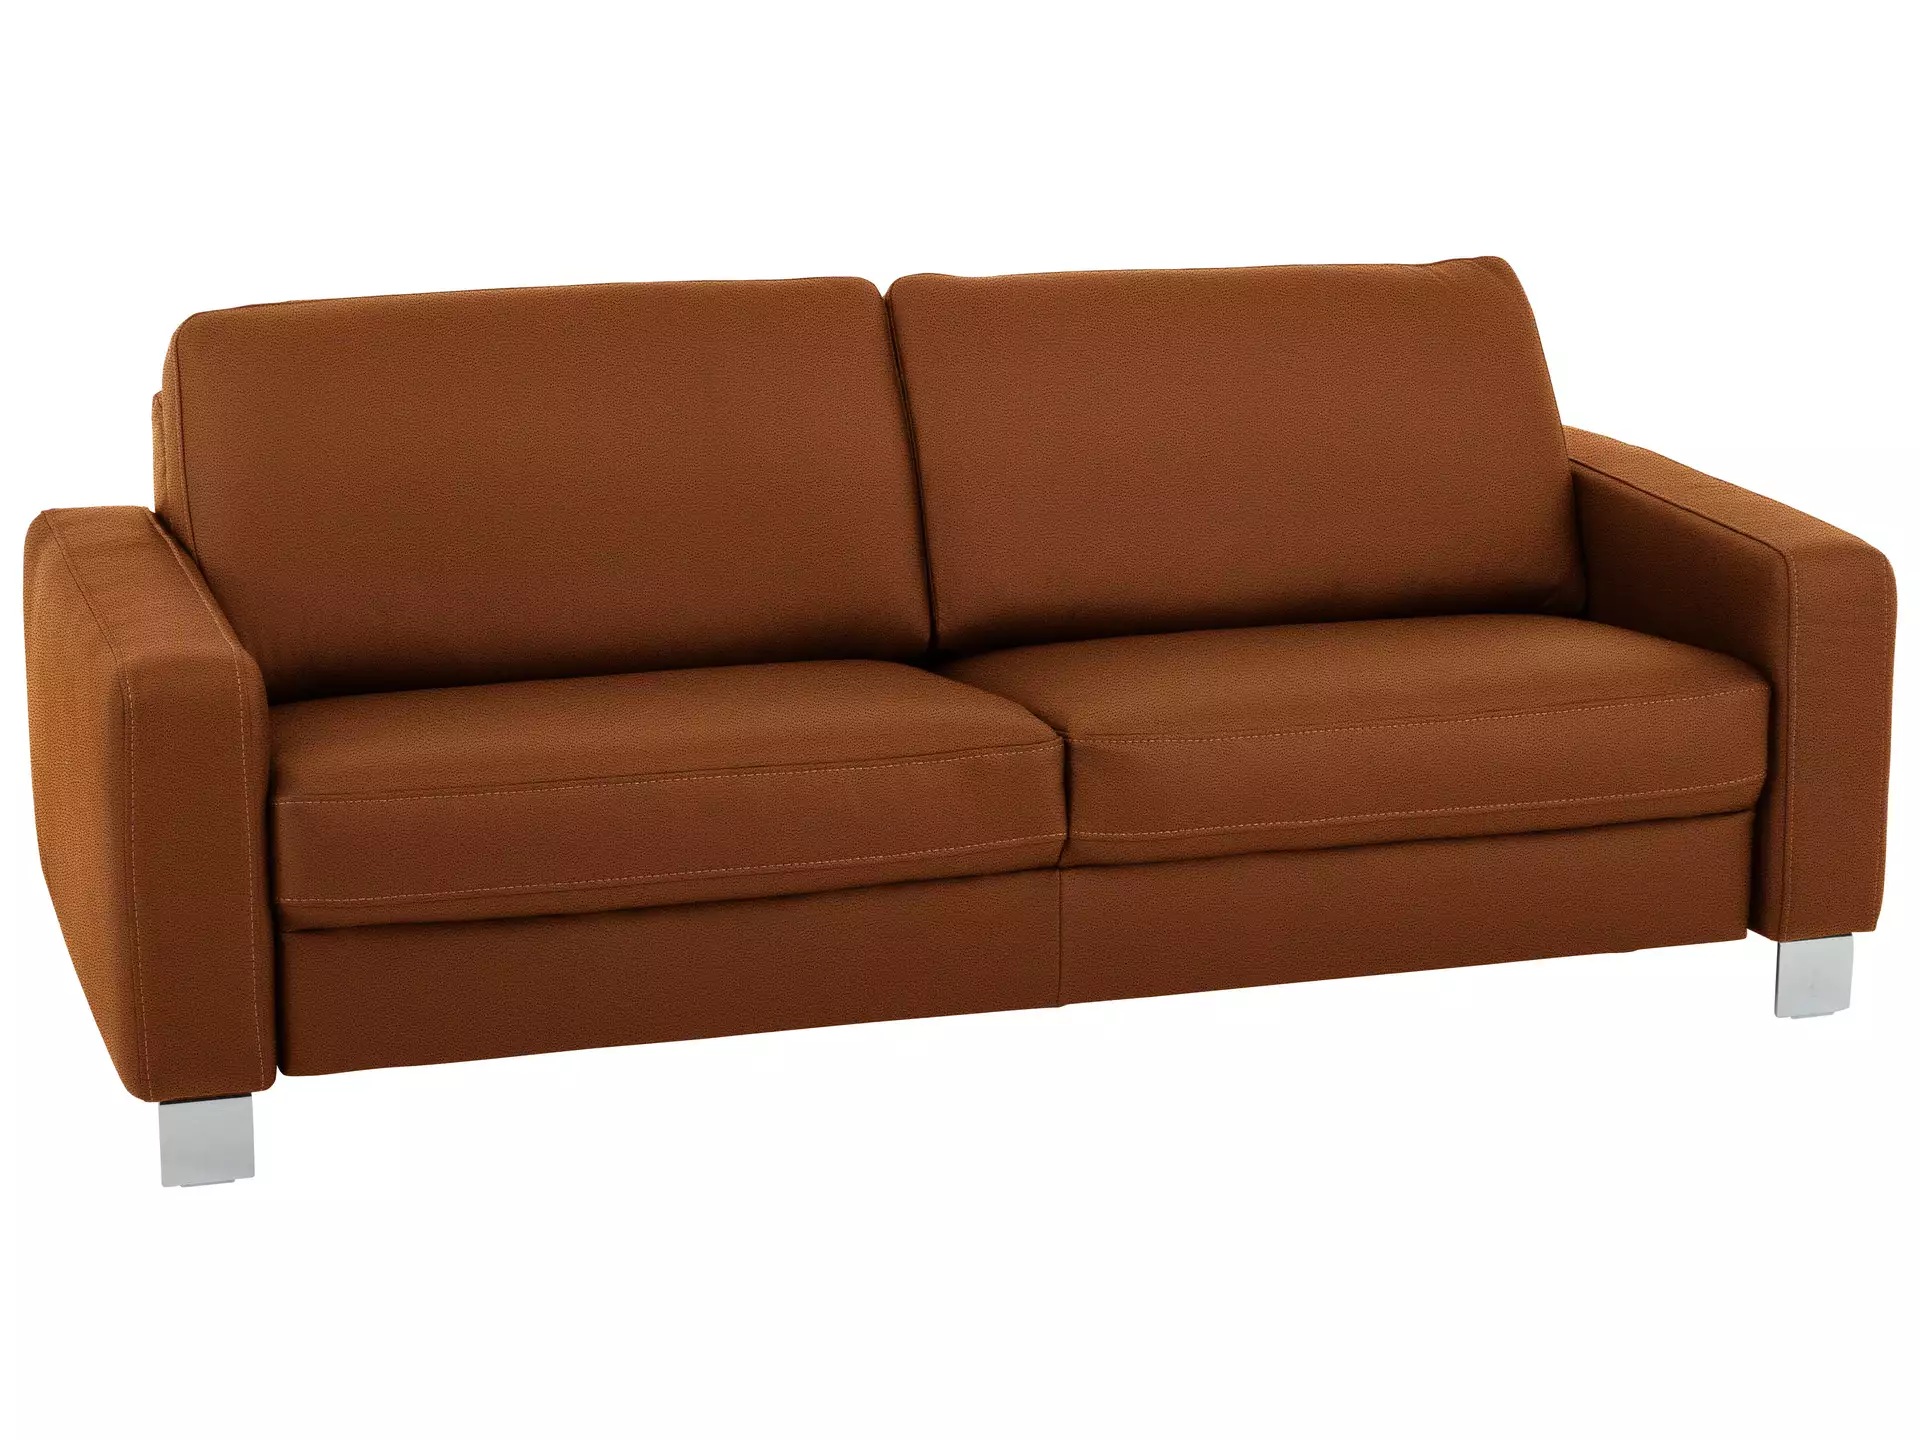 Sofa Shetland Basic B: 214 cm Polipol / Farbe: Zimt / Material: Microfaser Basic